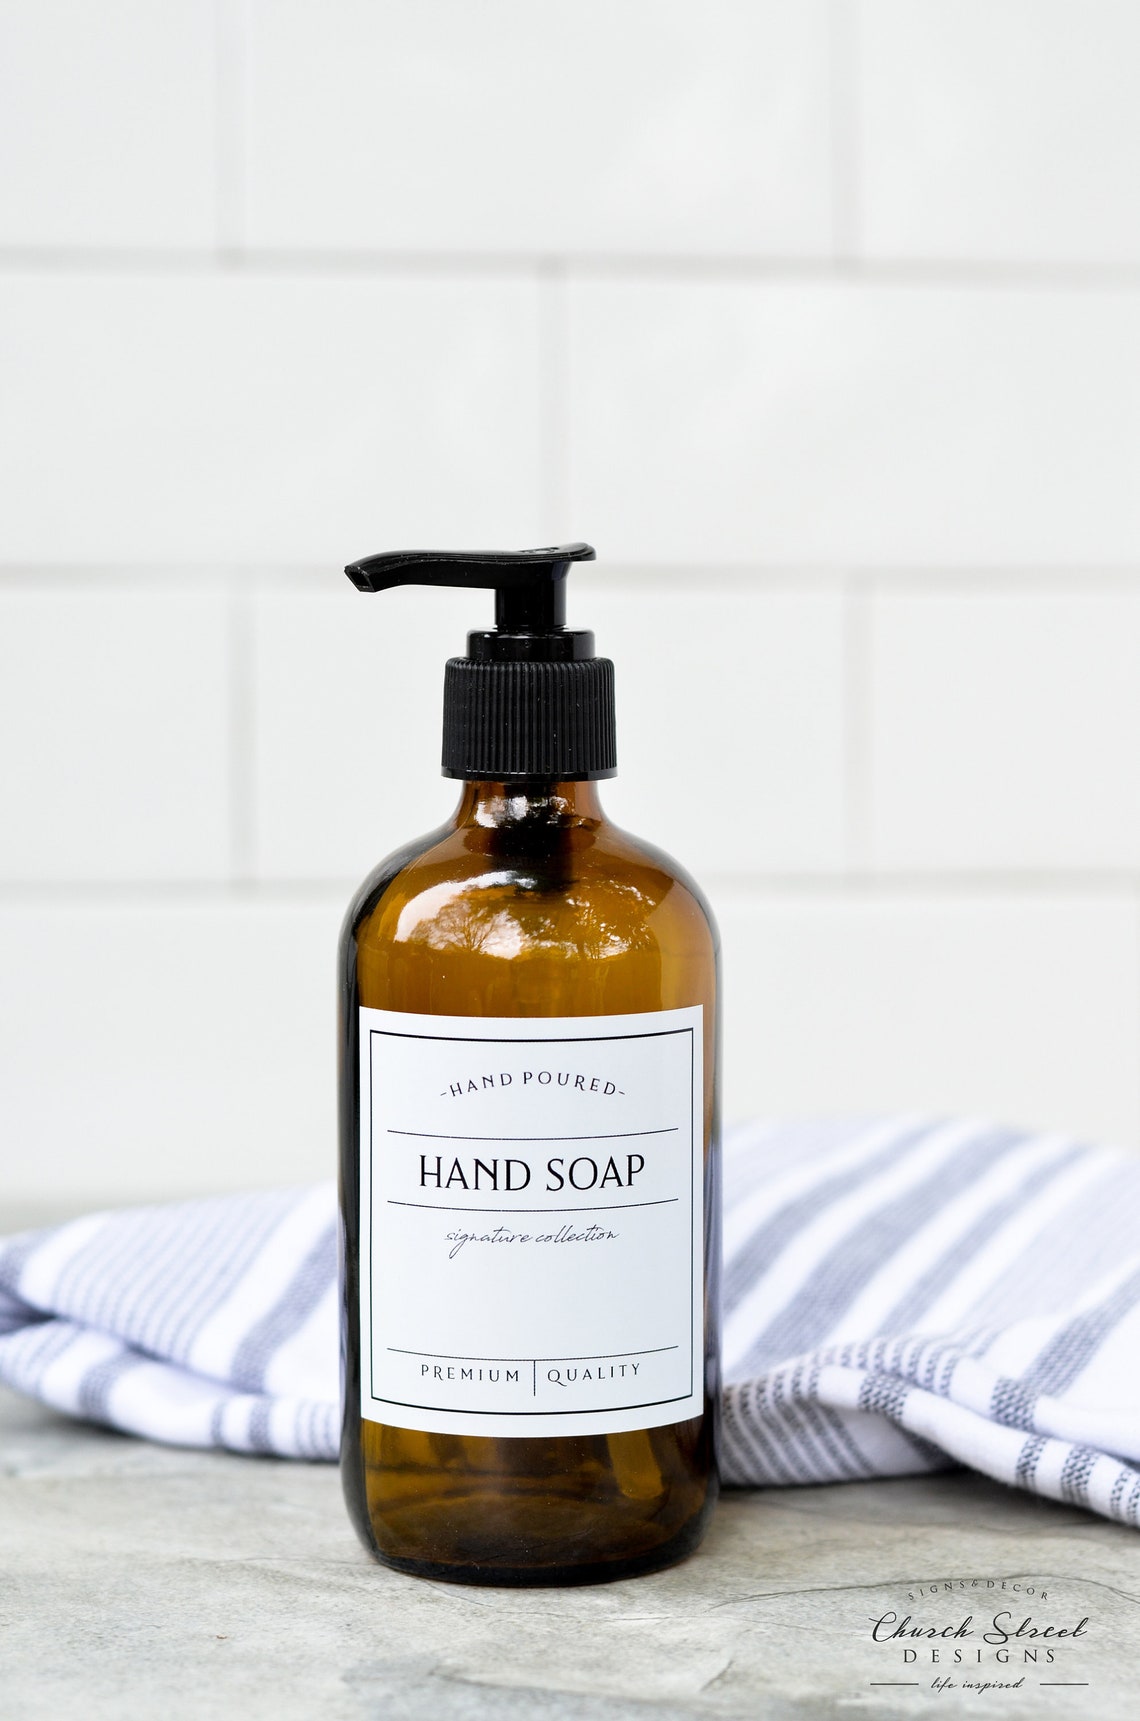 8oz Amber Glass Bottle - Hand Soap - Signature Style